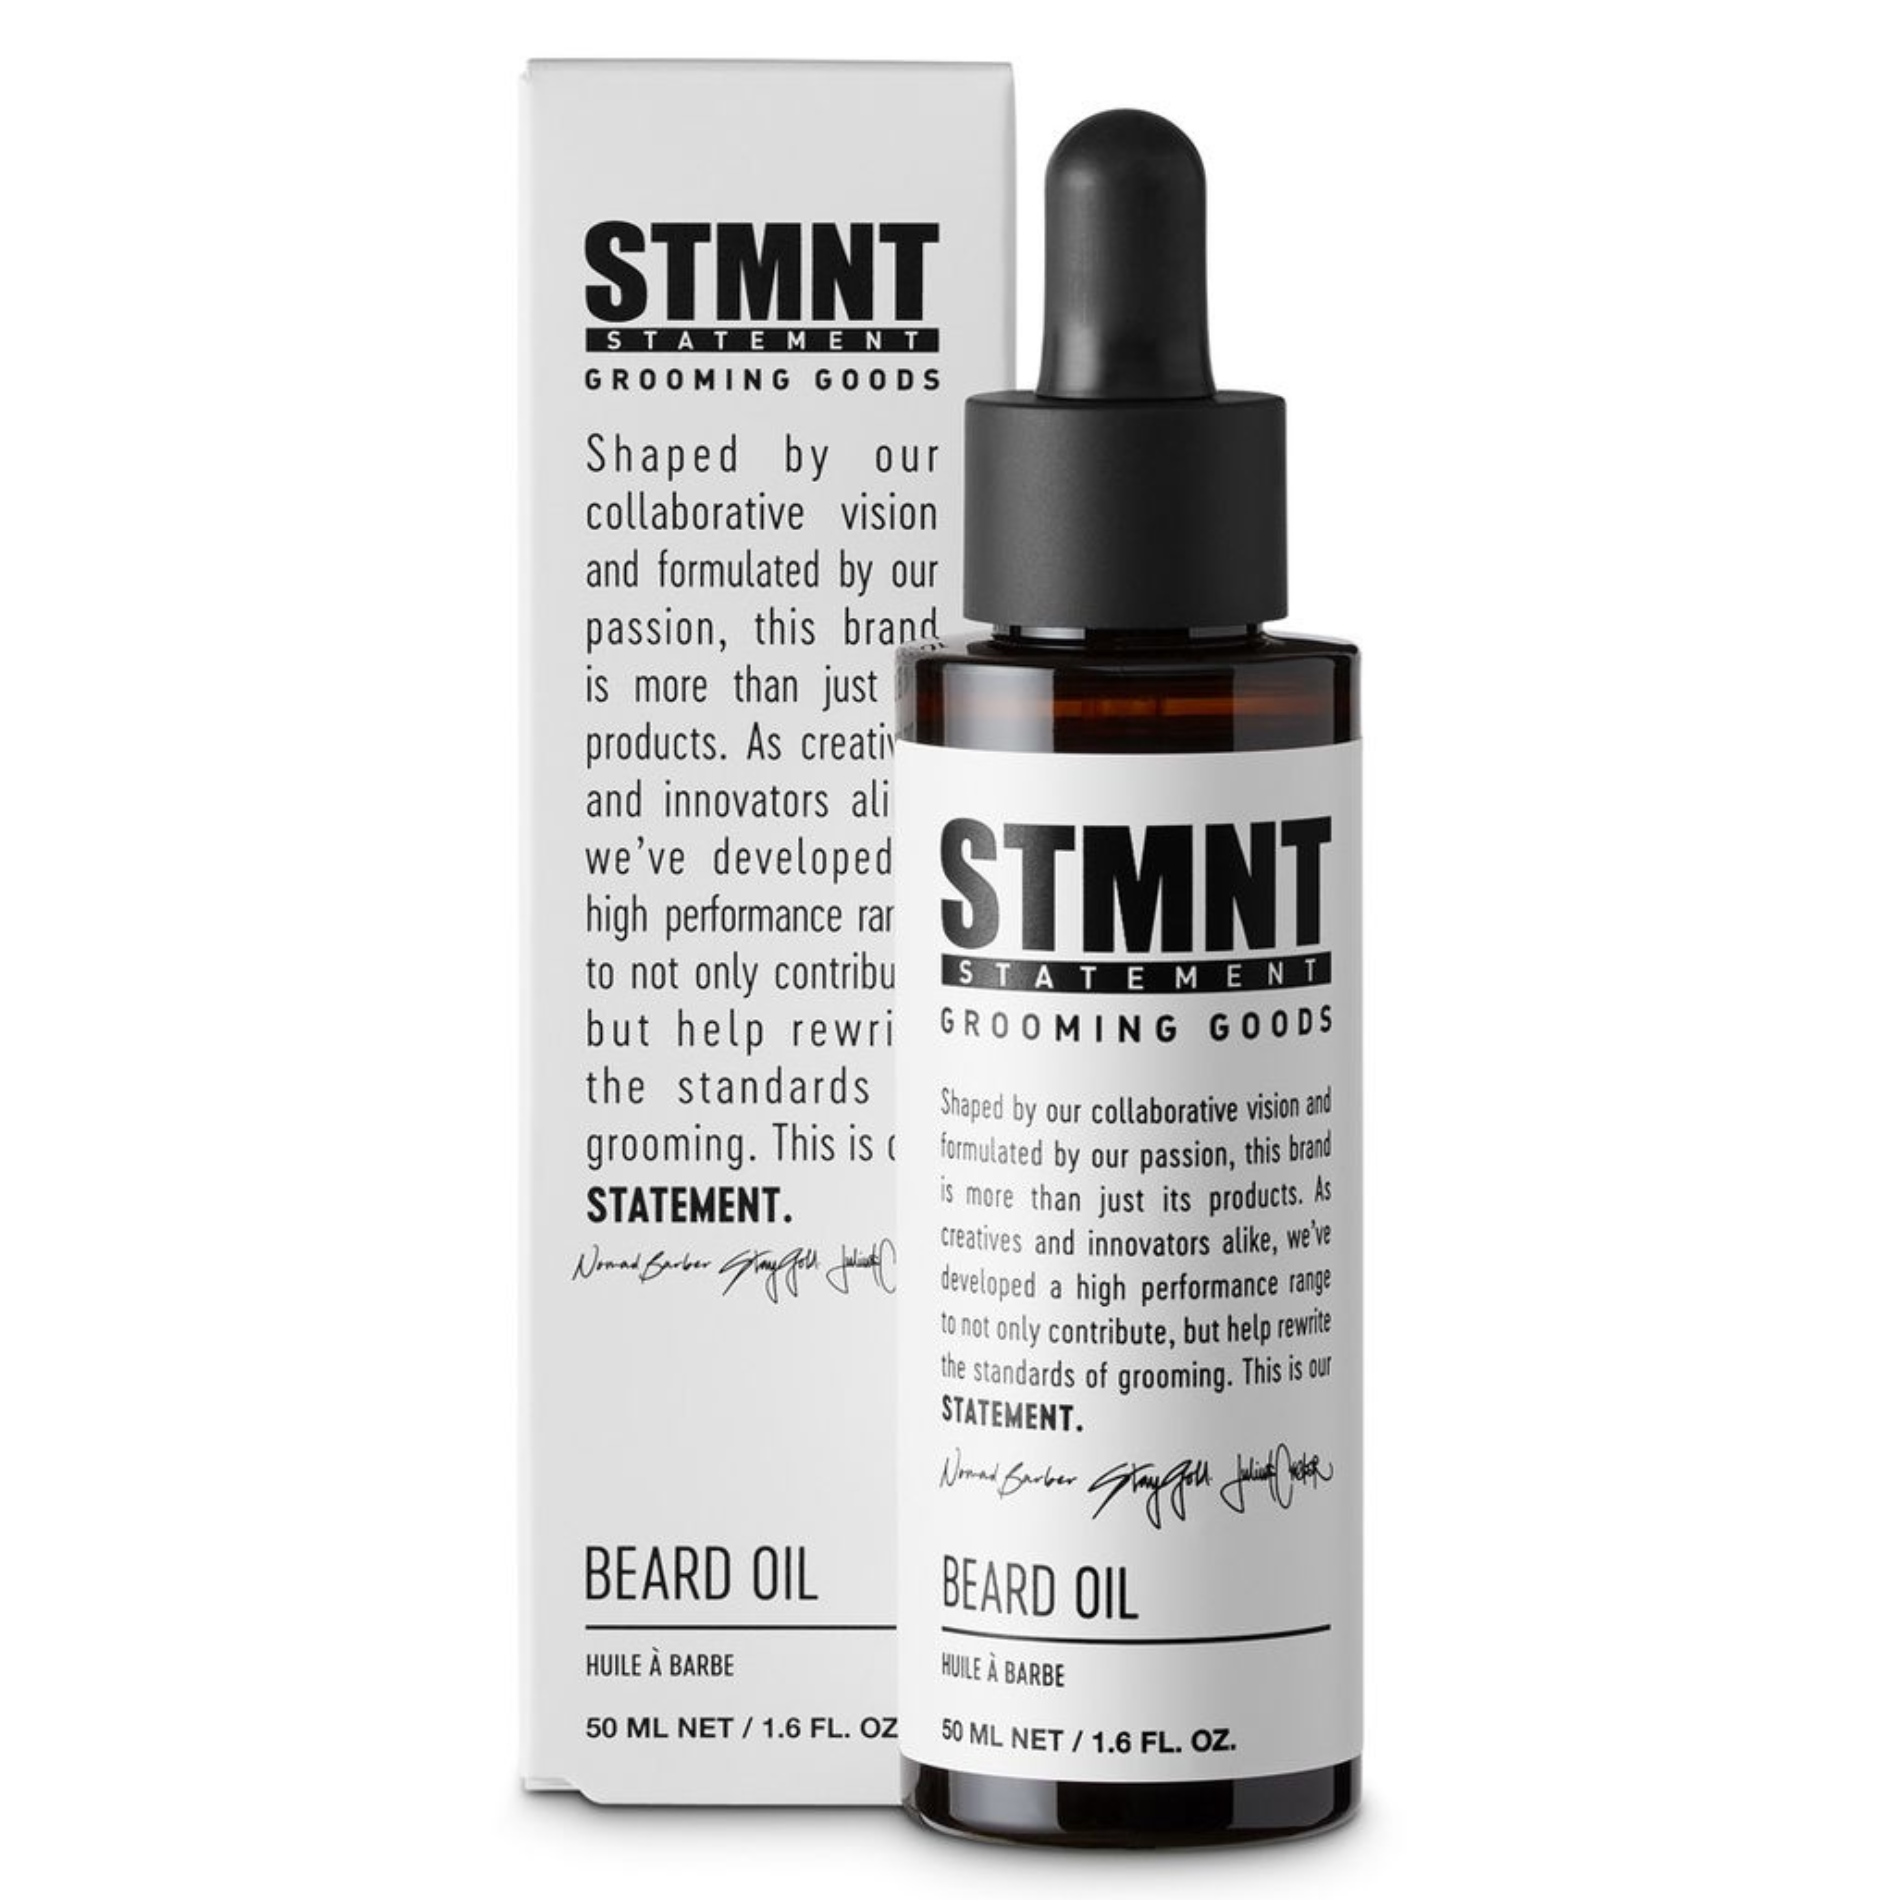 STMNT Grooming Goods Oil Beard